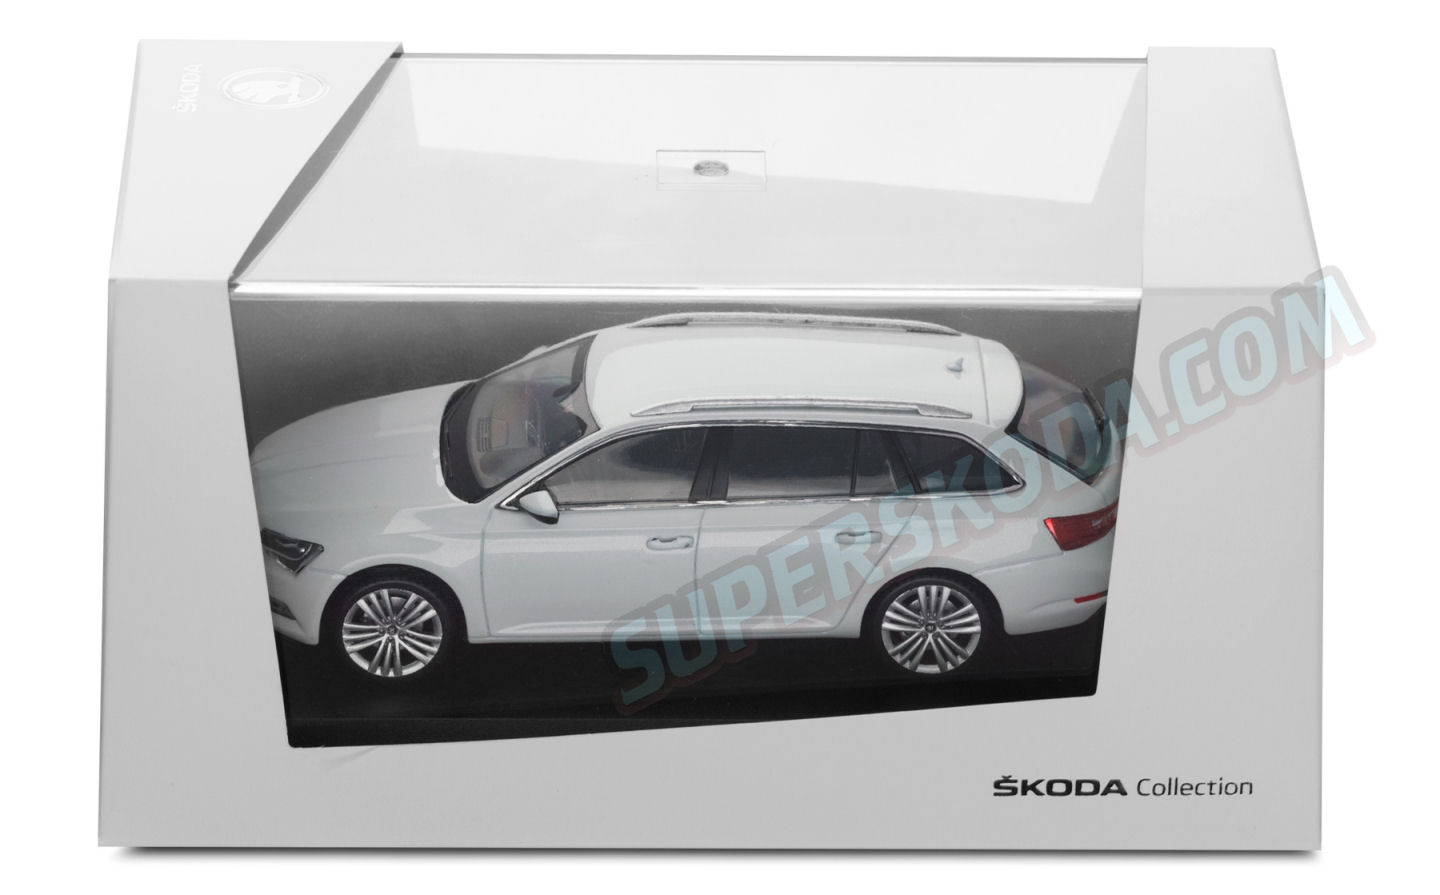 Skoda 3V9099300S9R Superb Combi III Model Car 1:43 Miniature White